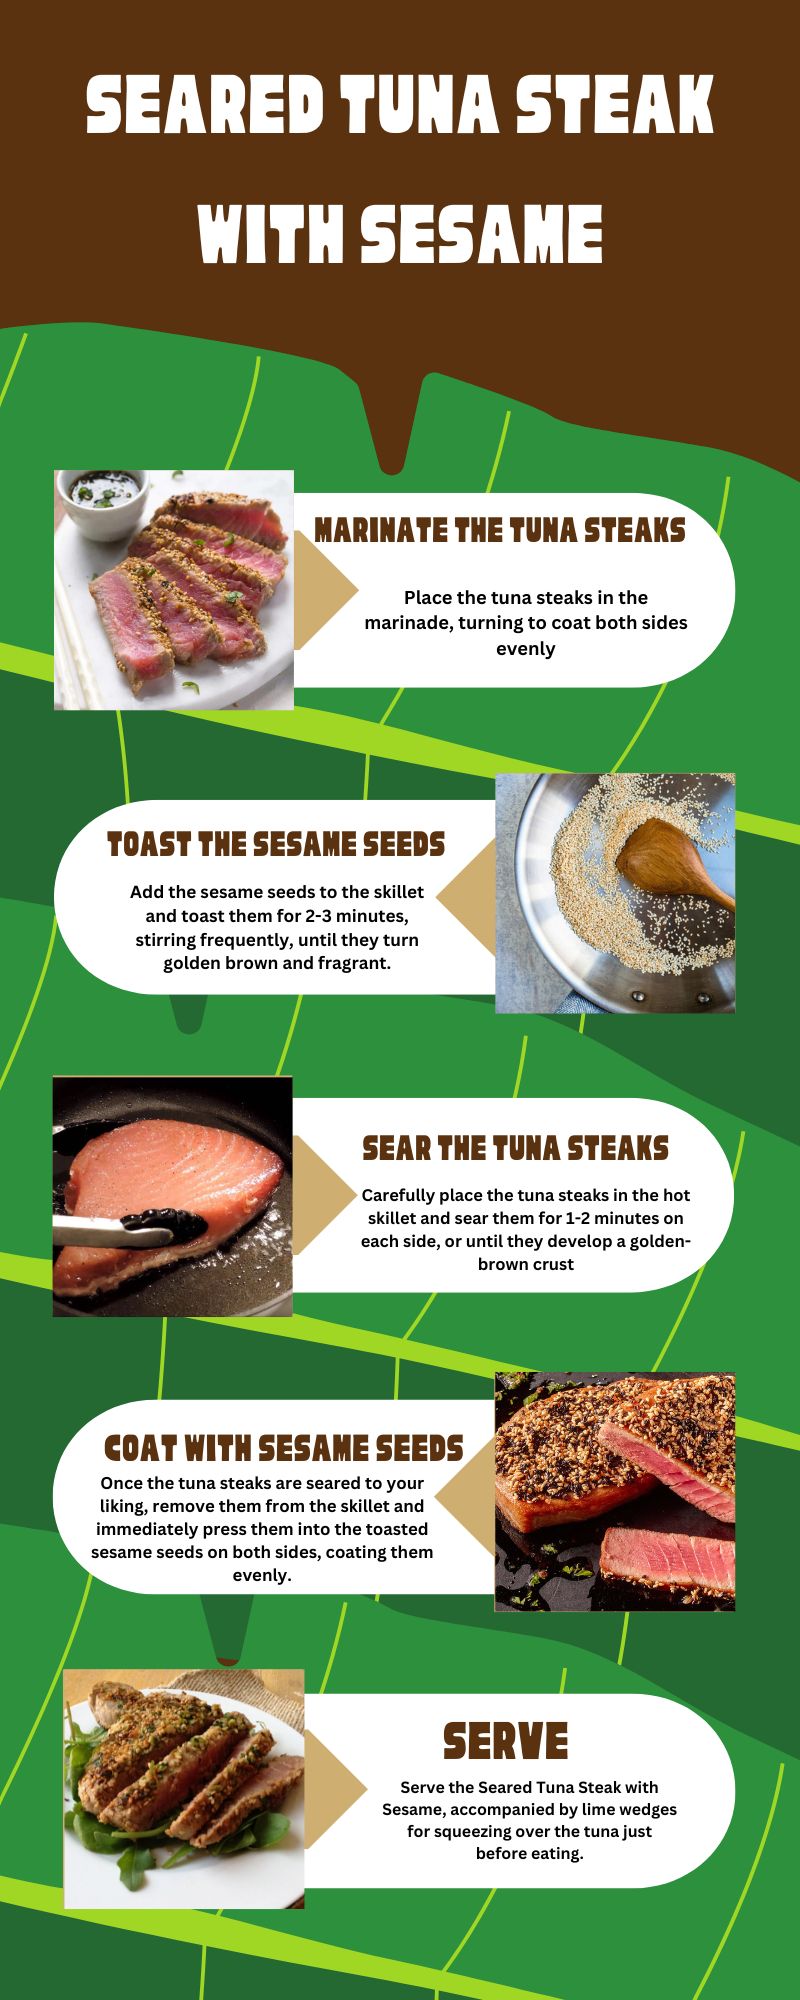 Seared Tuna Steak with Seasame Recipe